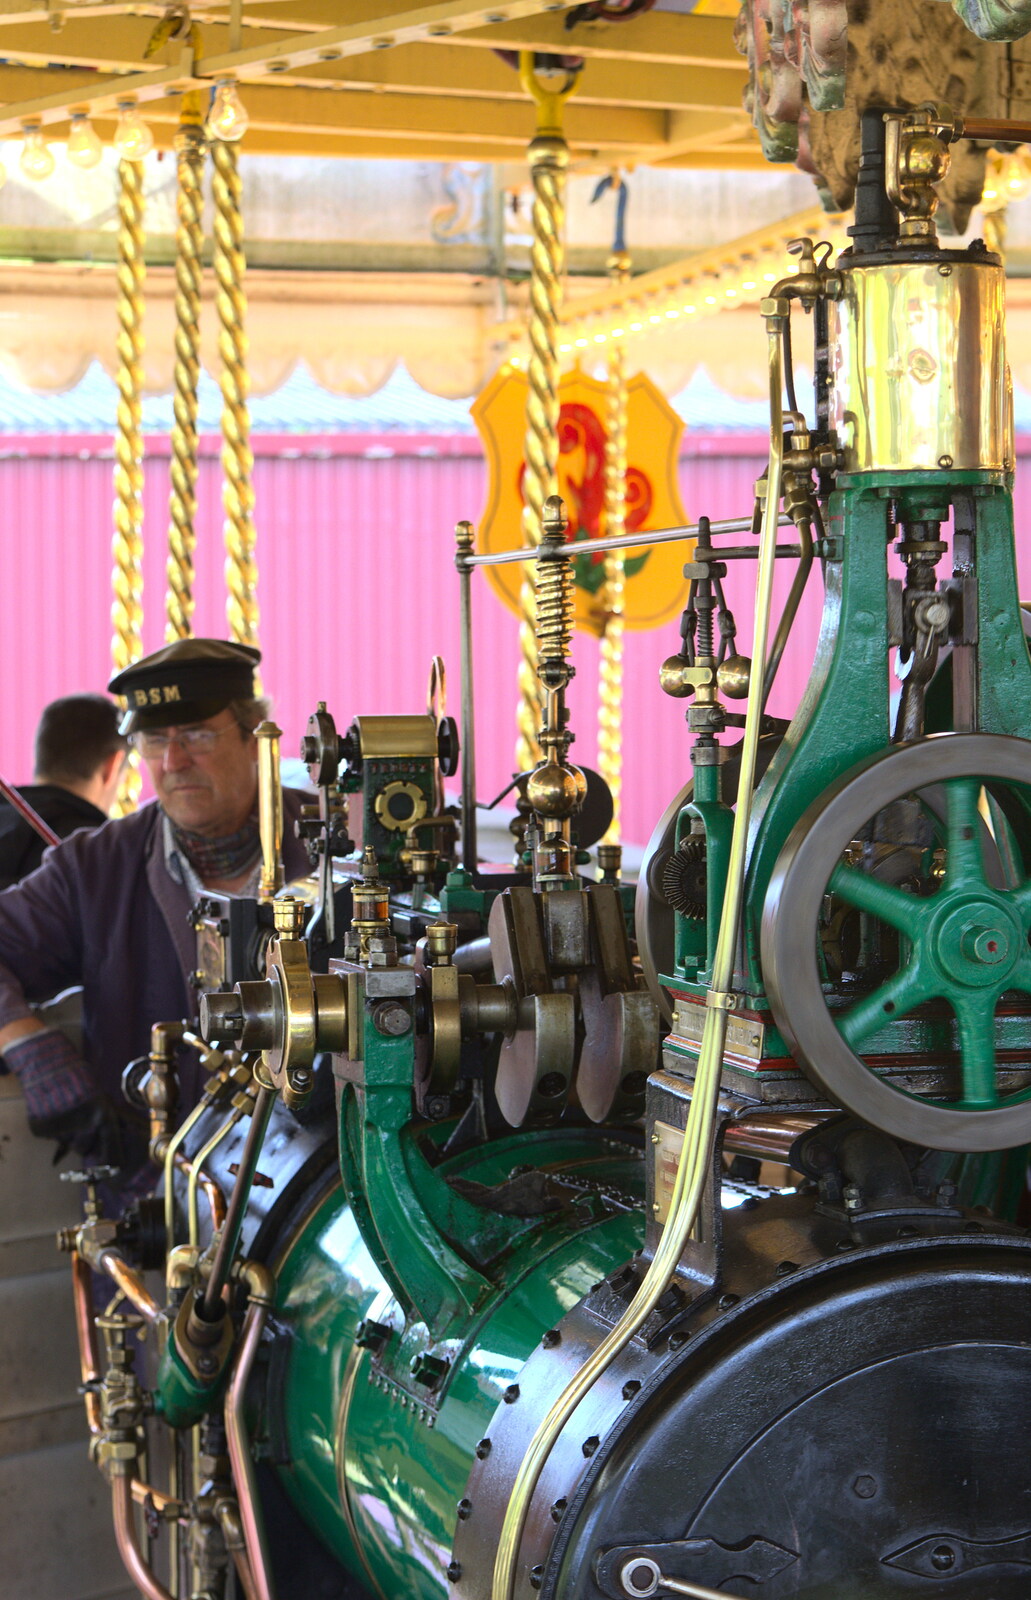 The carousel is under full steam power today from A Trip to Bressingham Steam Museum, Bressingham, Norfolk - 28th September 2014